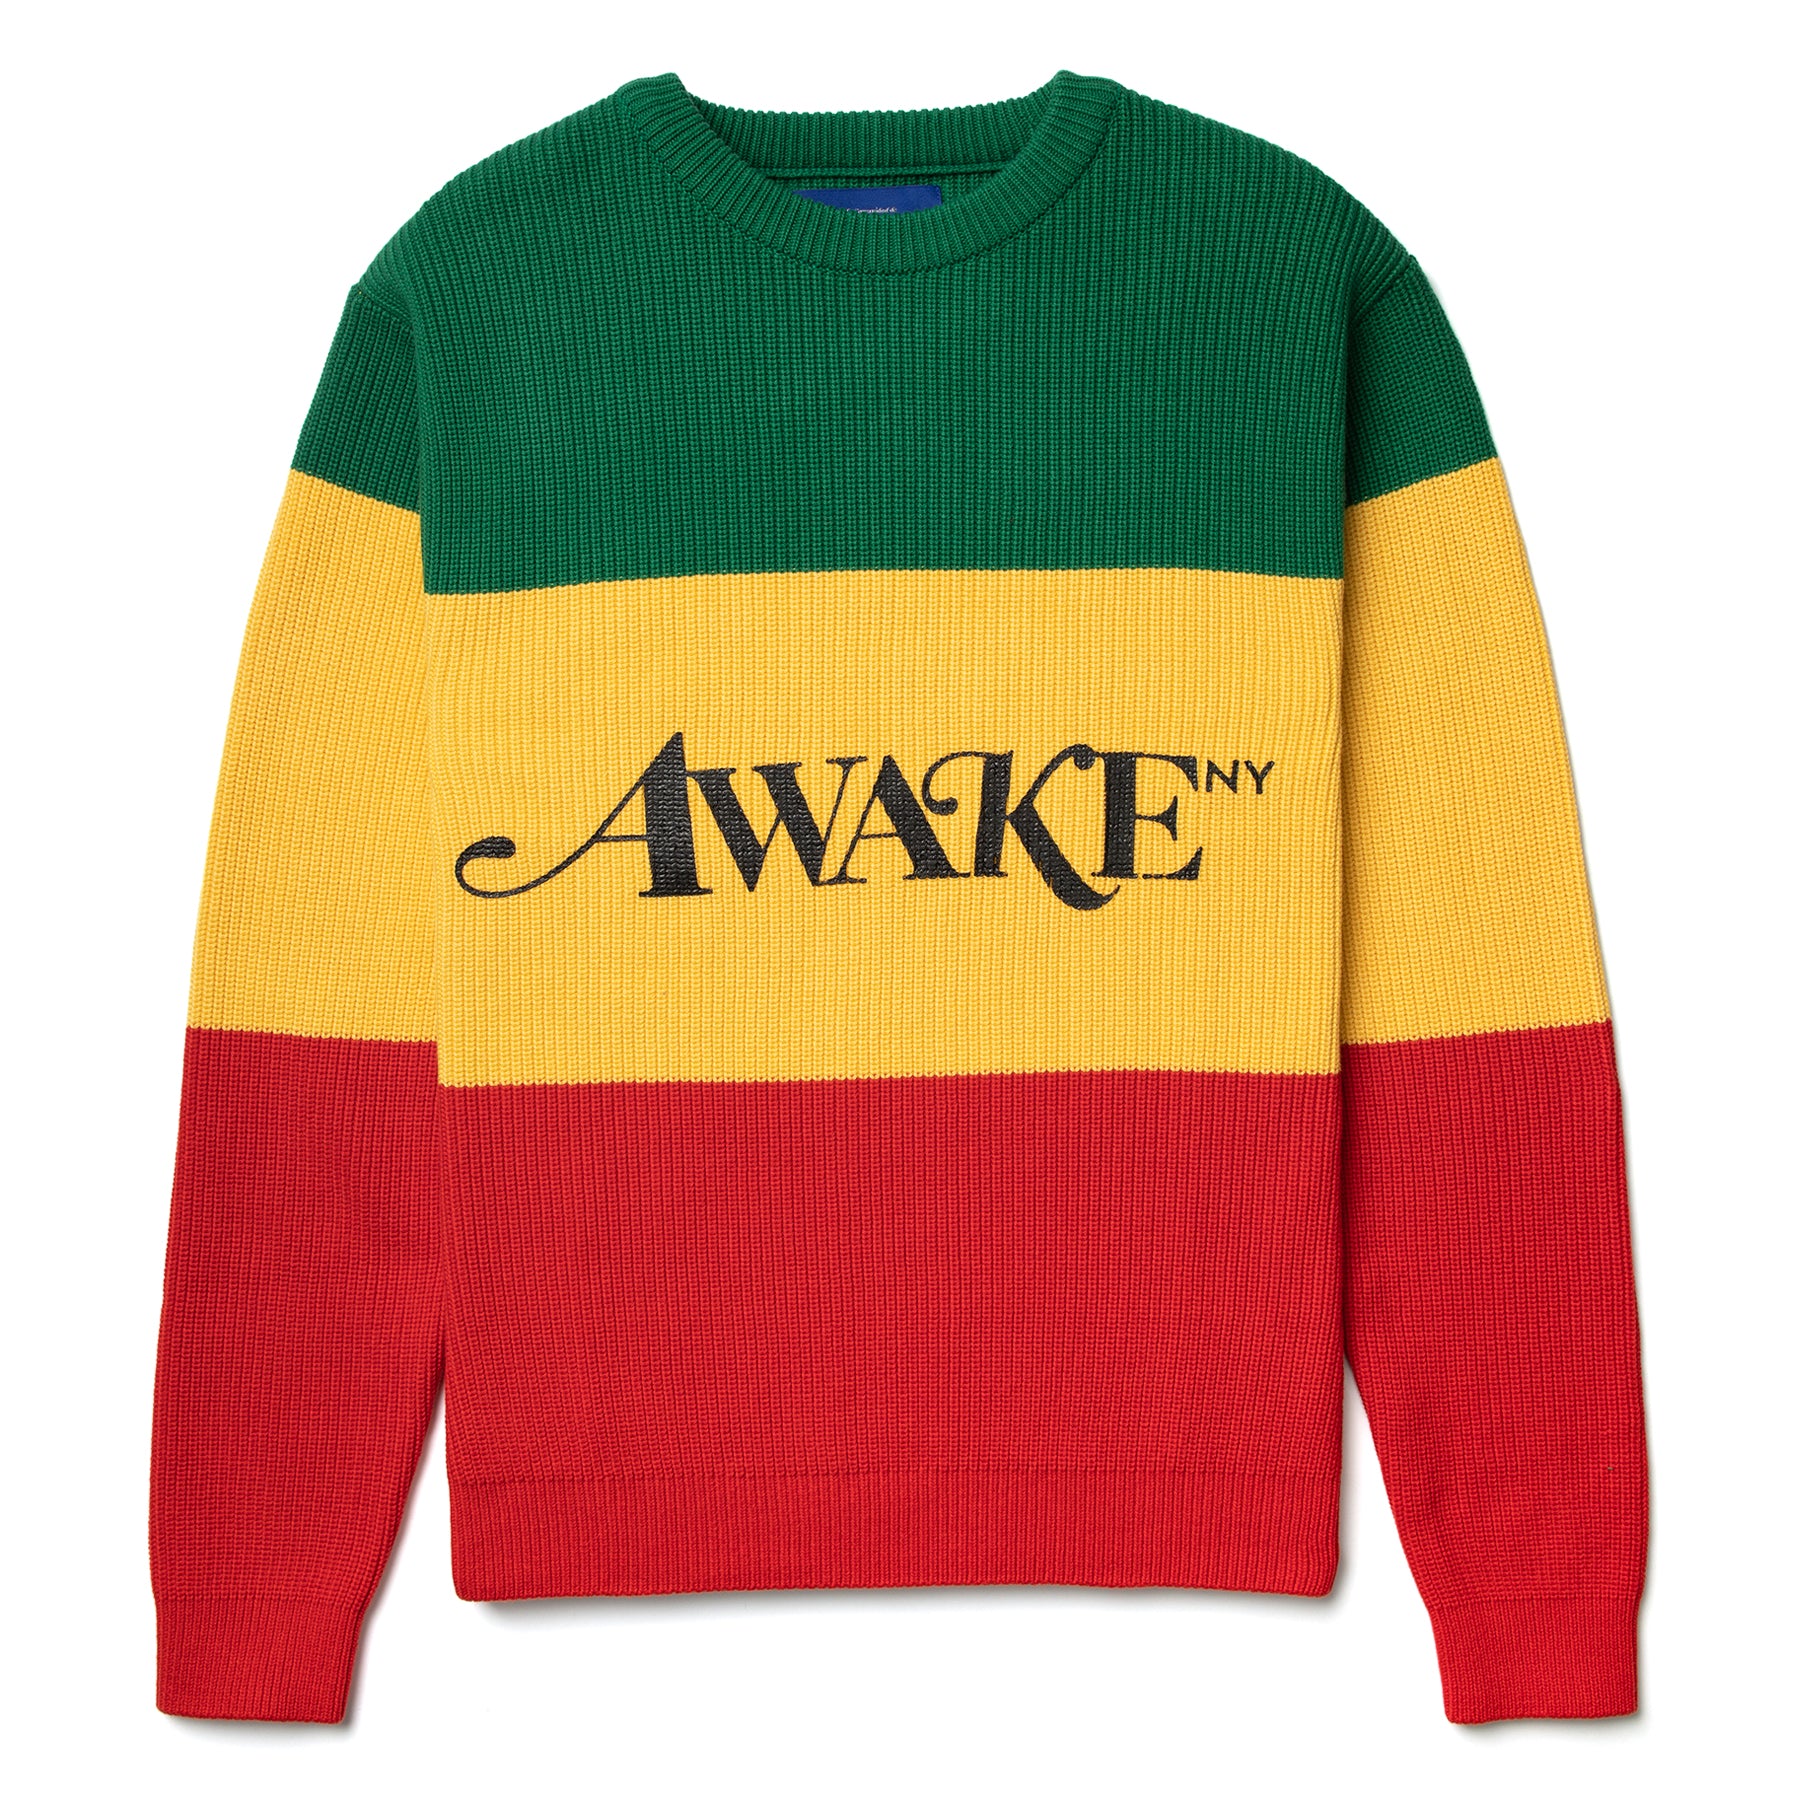 Awake Blessings Sweater